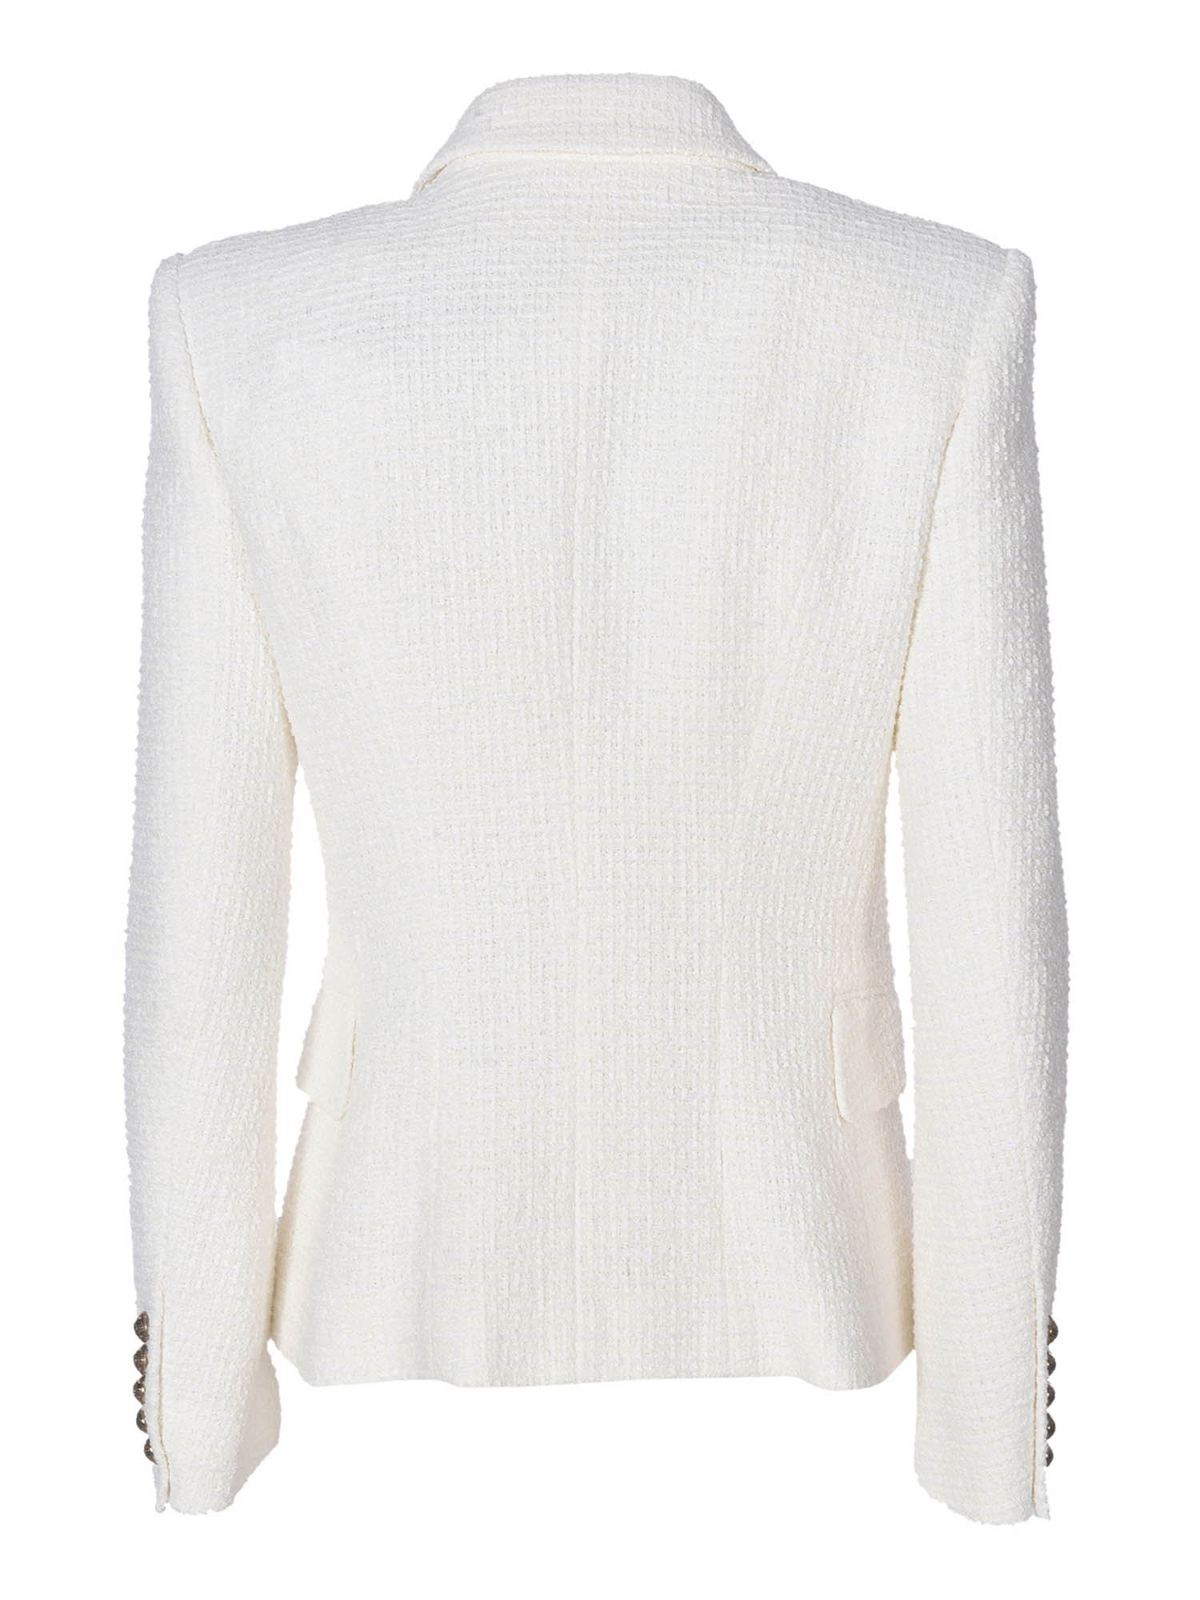 Blazers Balmain - Double-breasted tweed jacket in white - UF17110C2570FA